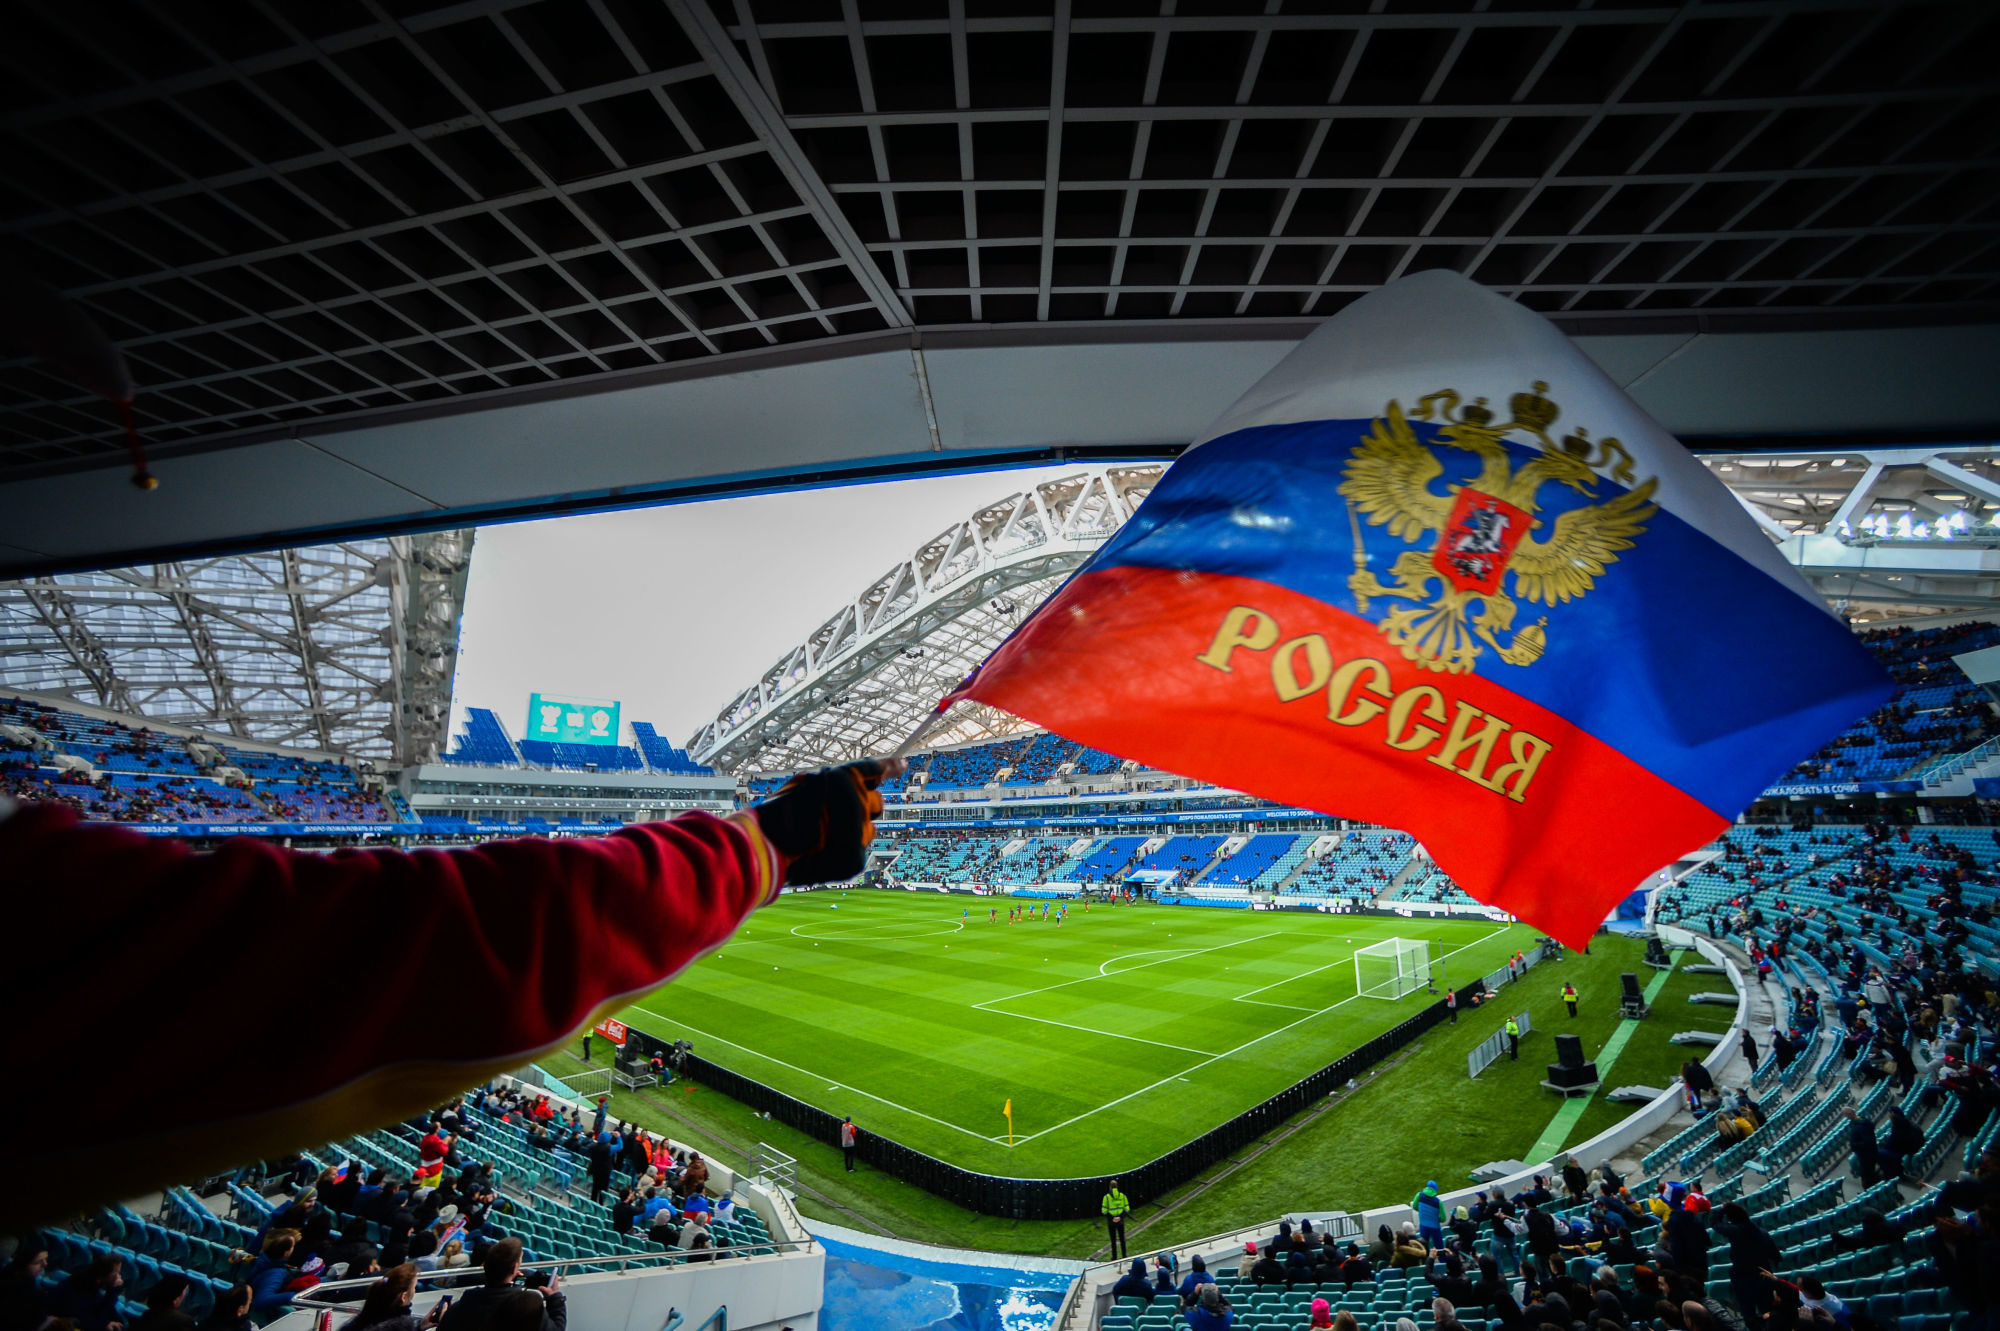 Стадион флаги. Флаг России на стадионе. Флаги на стадионе. Футбол флаги на трибунах. Знамя на трибуне стадиона.